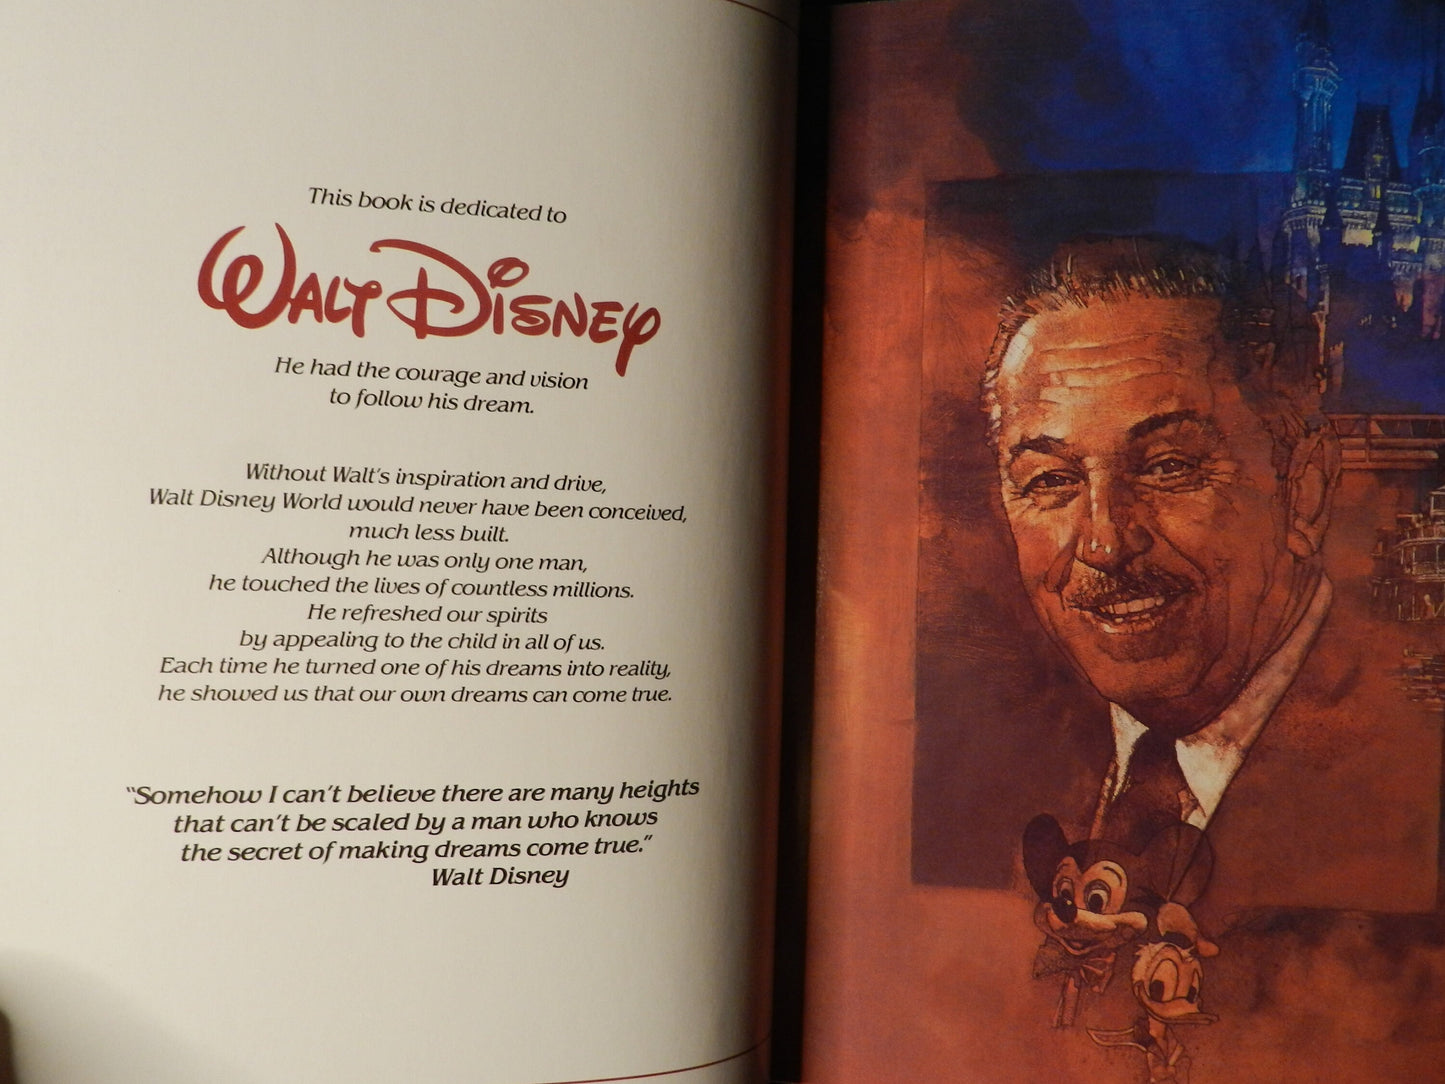 Vintage Commemorative Book "Walt Disney World" 1986